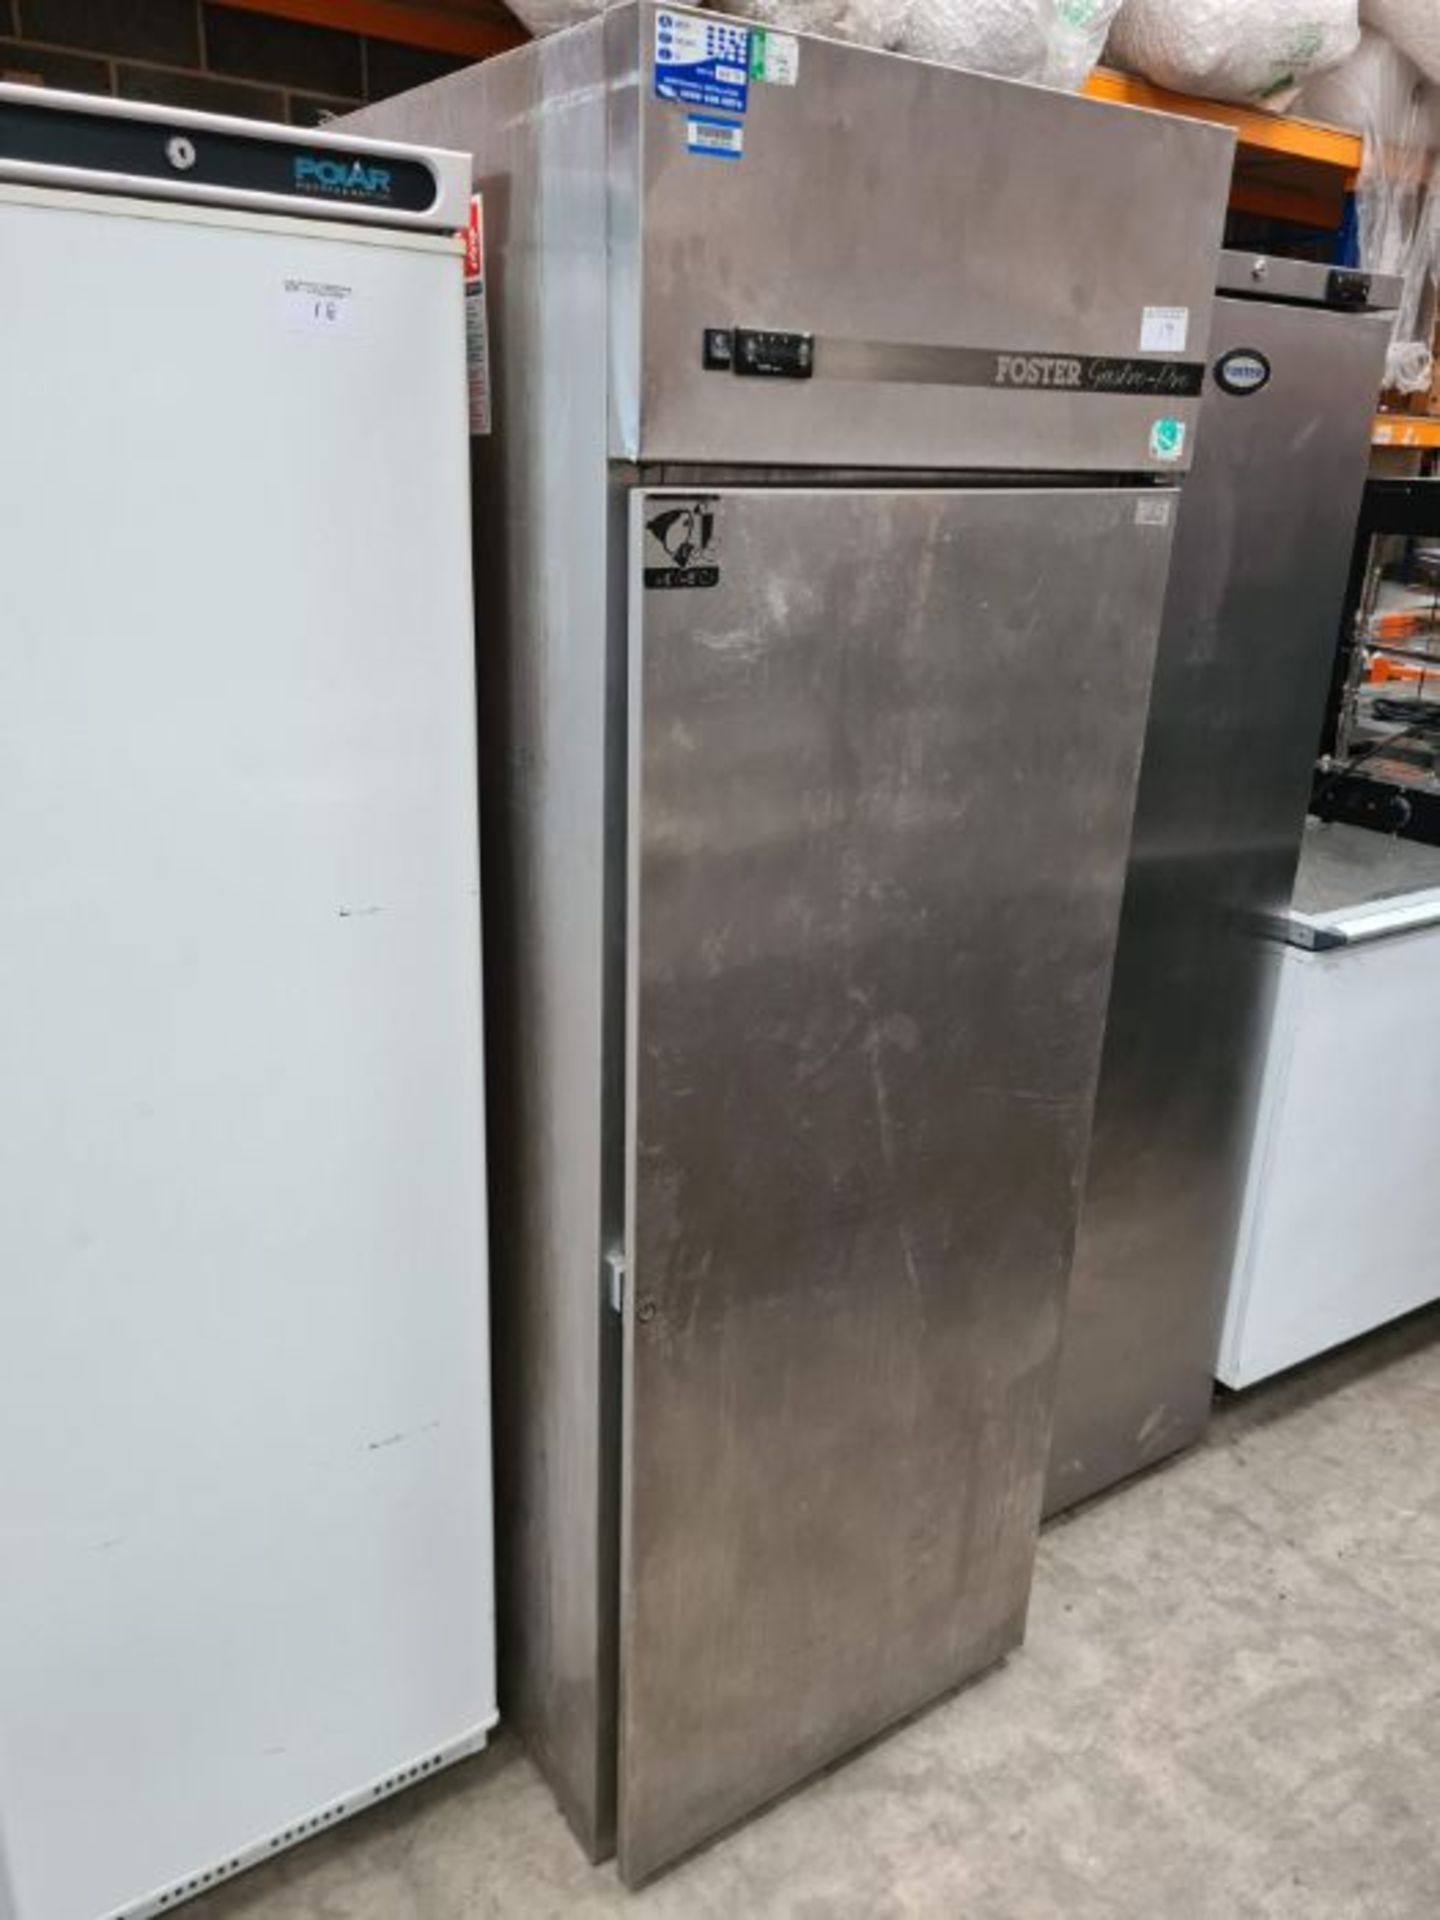 Fosters gastro-pro upright fridge.